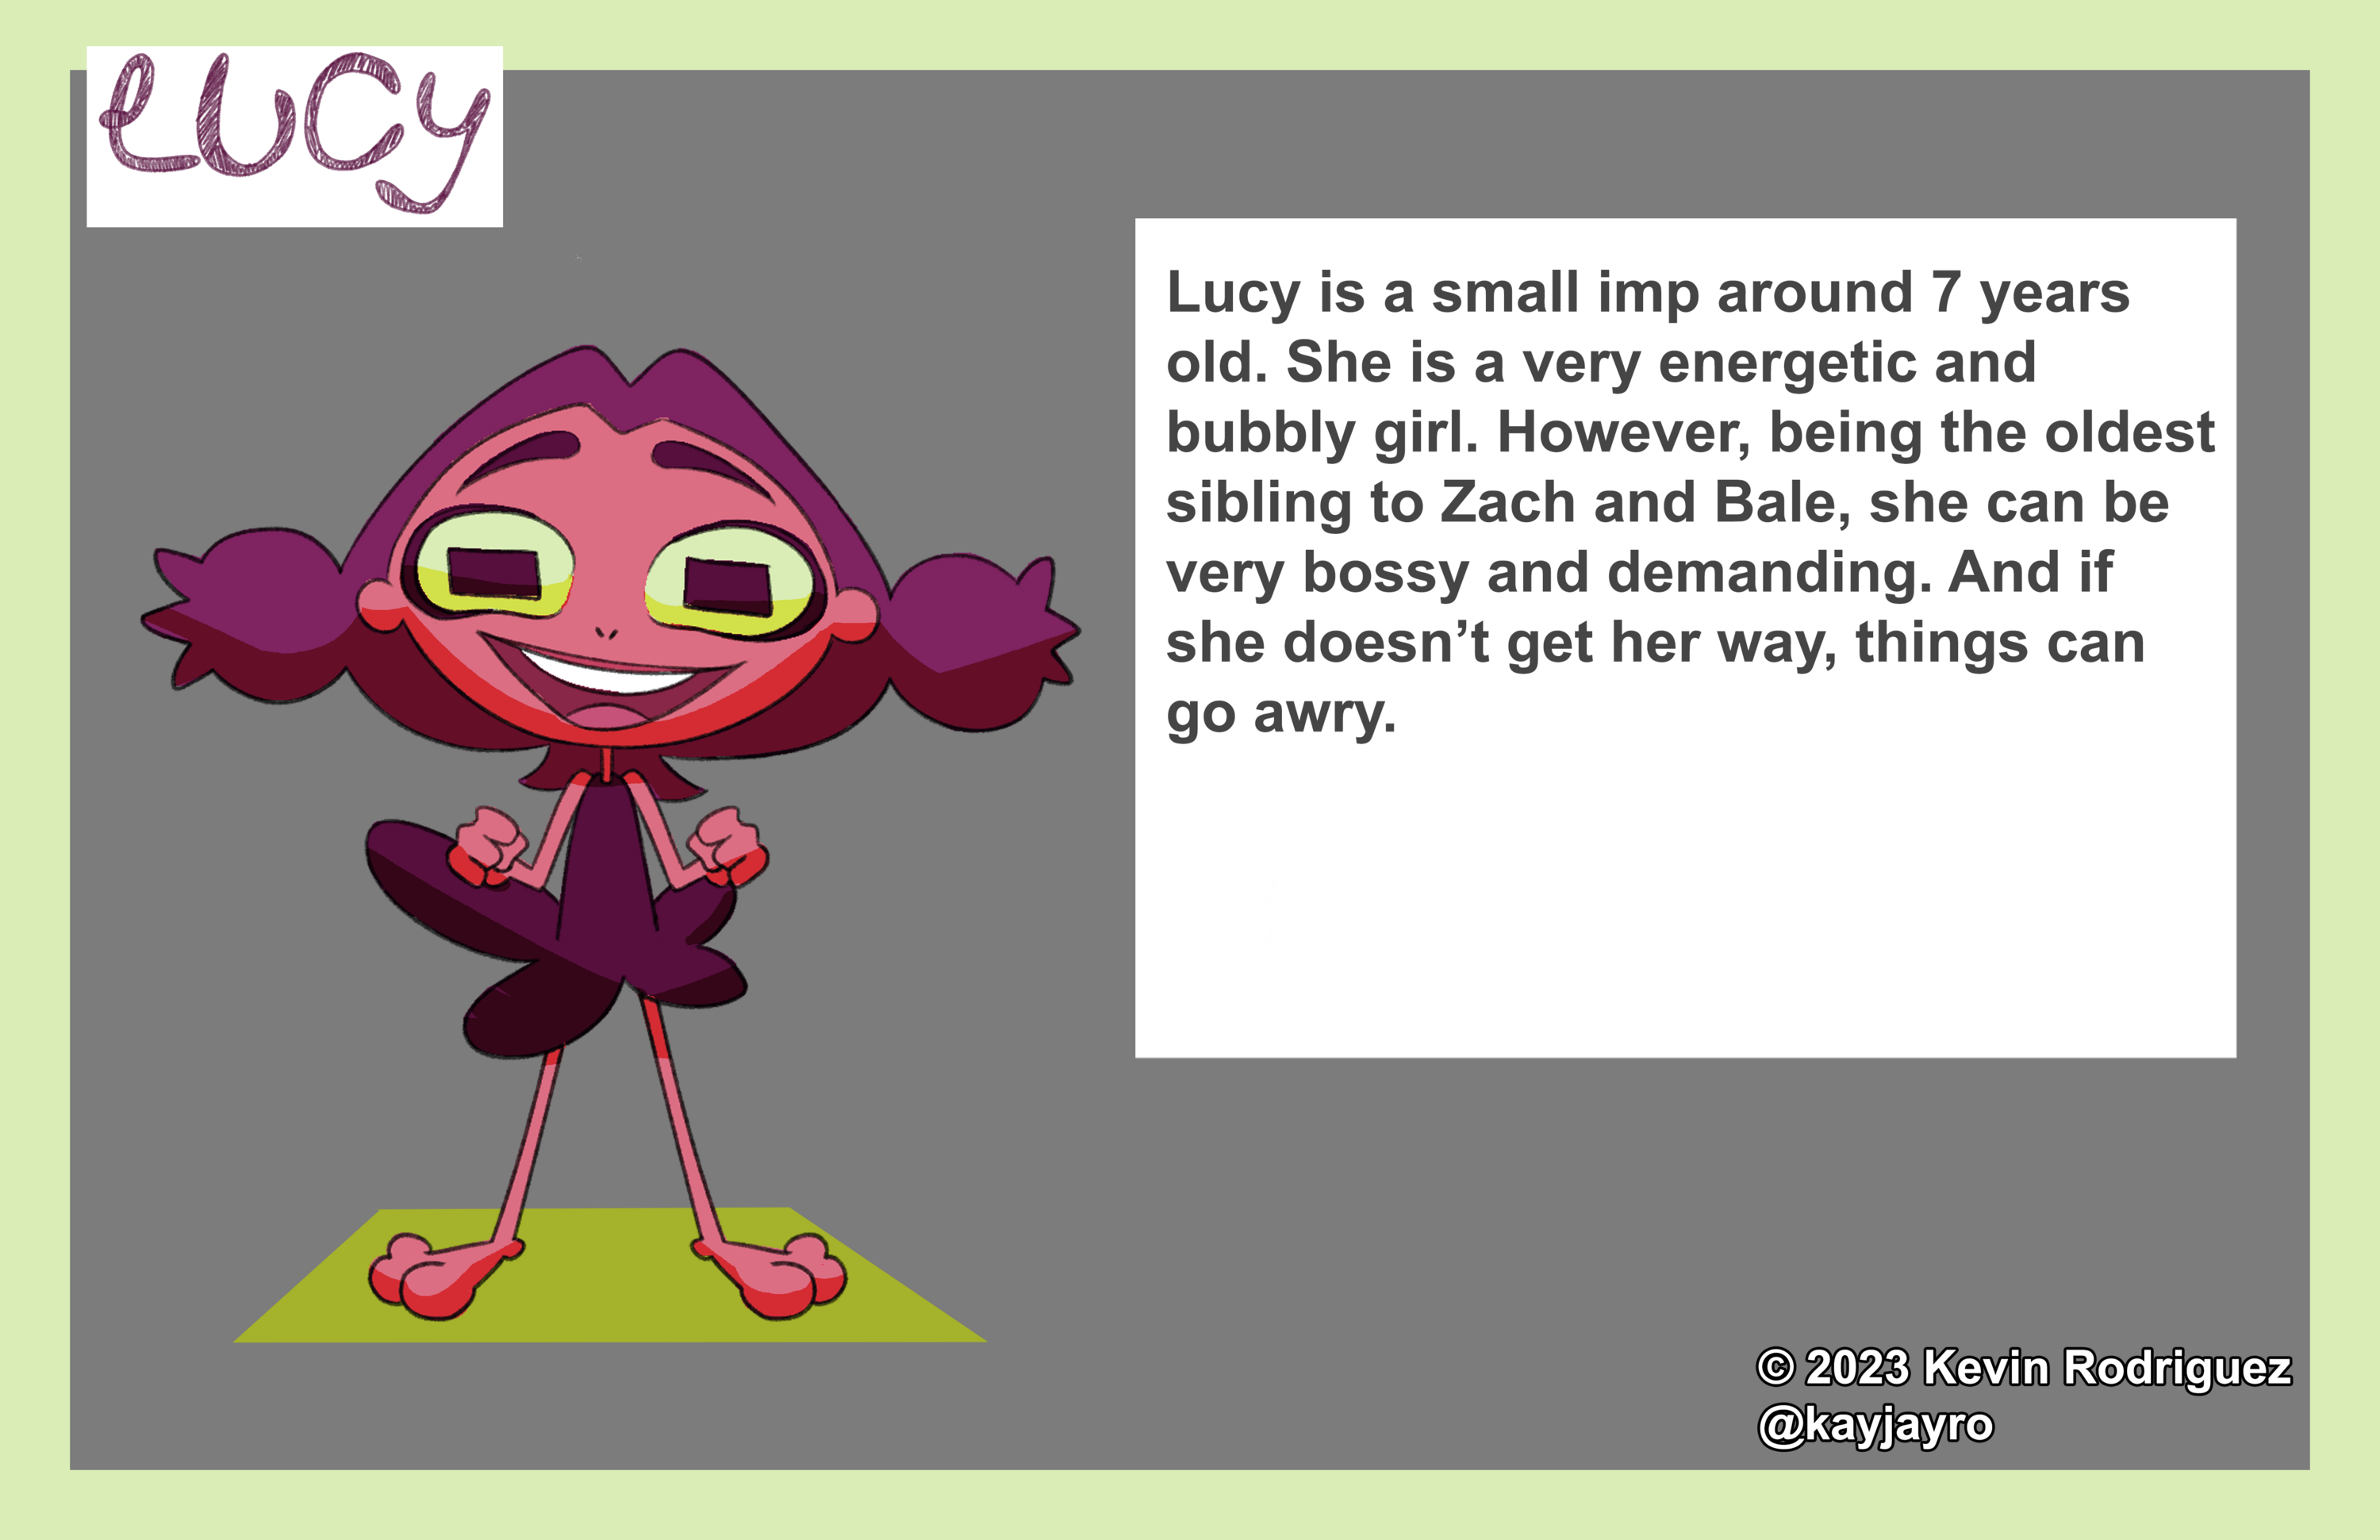 A sheet describing the character Lucy